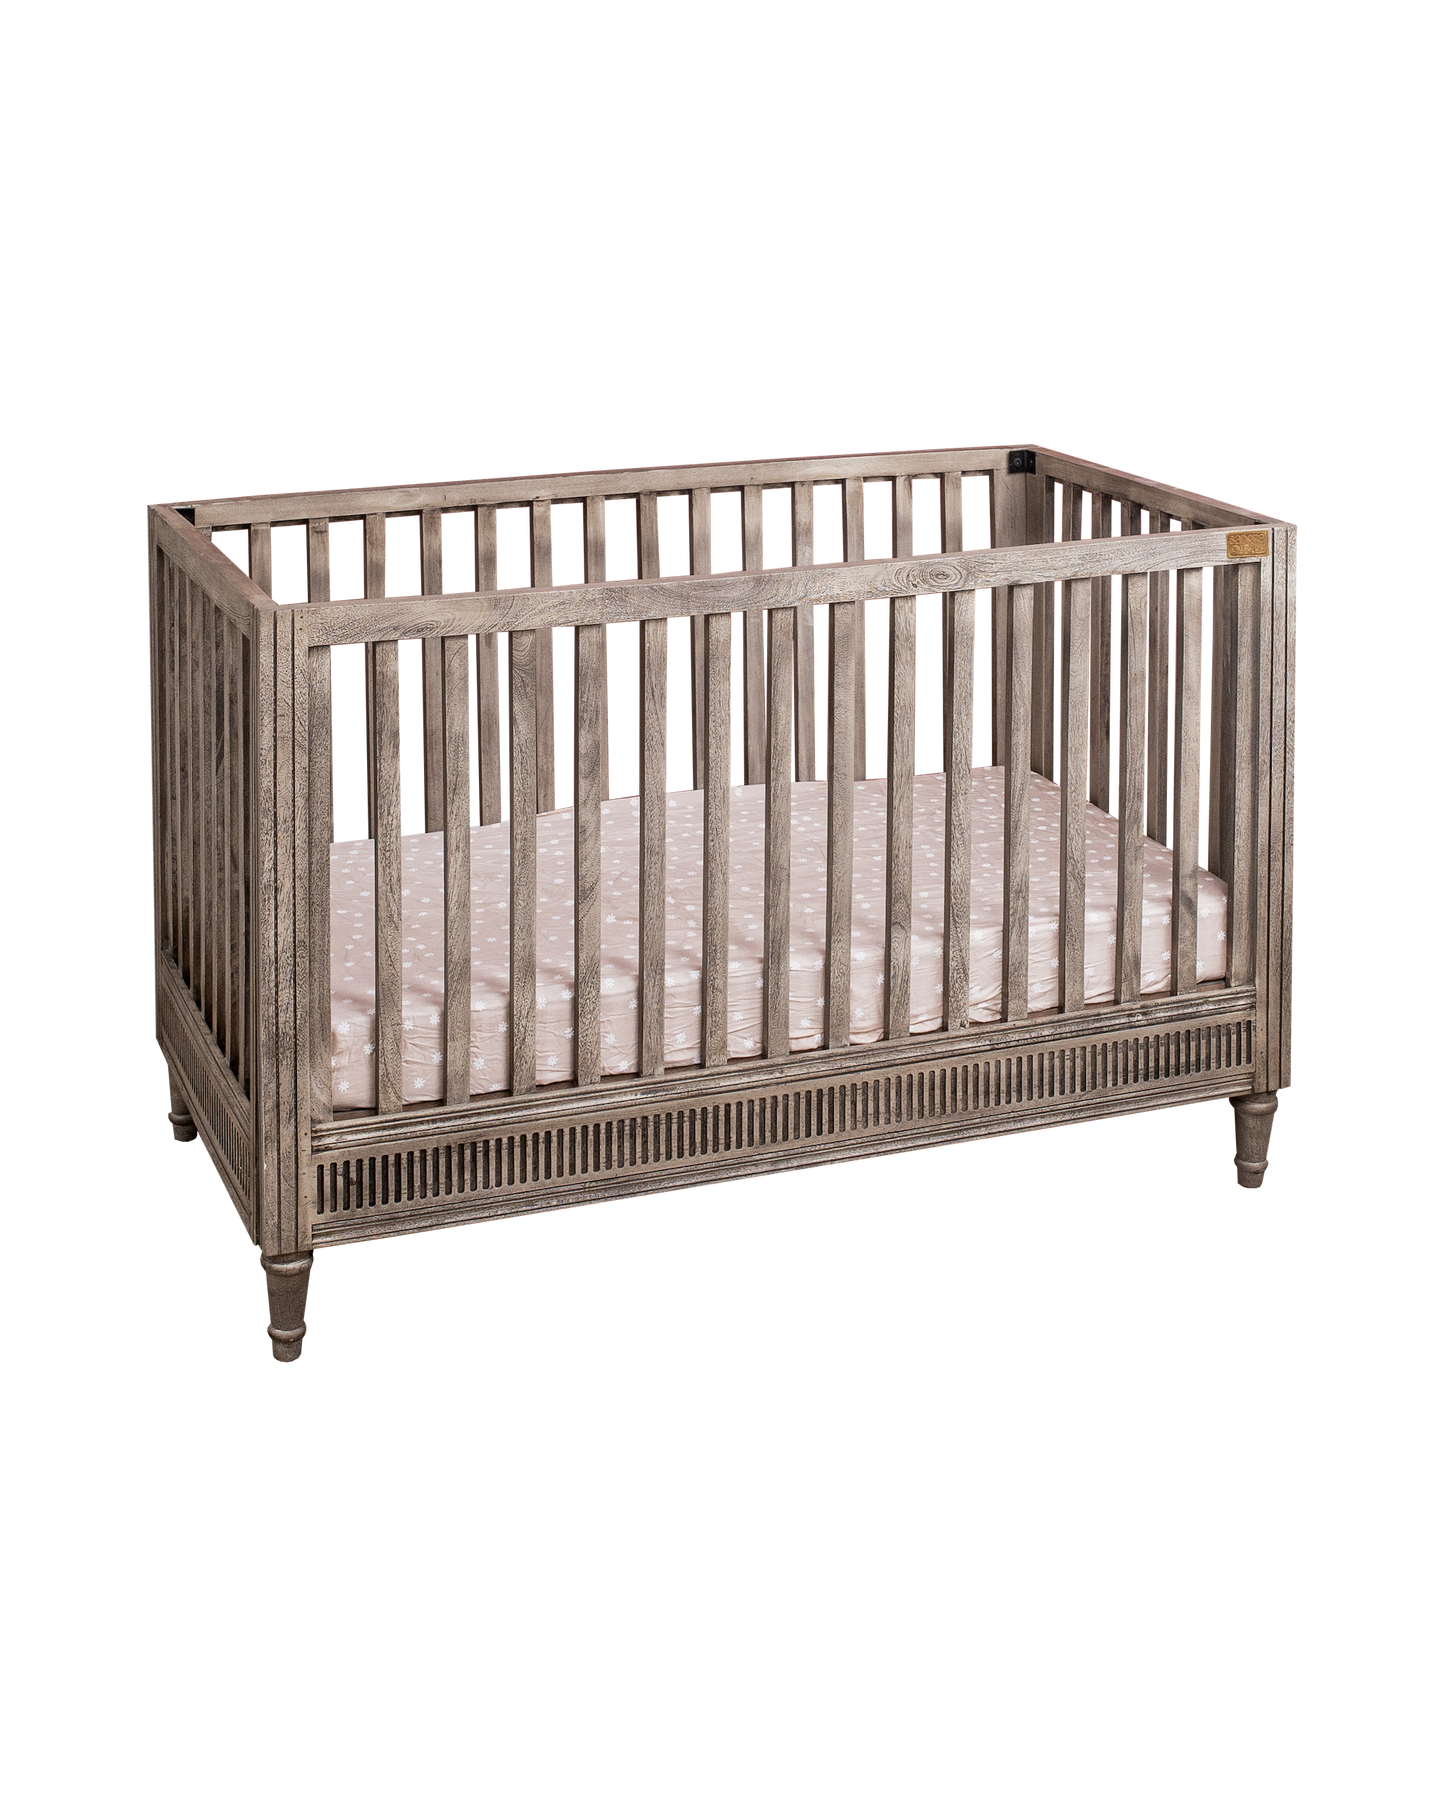 Buy Wooden Baby Cot - Ash Grey Online - SkilloToys.com